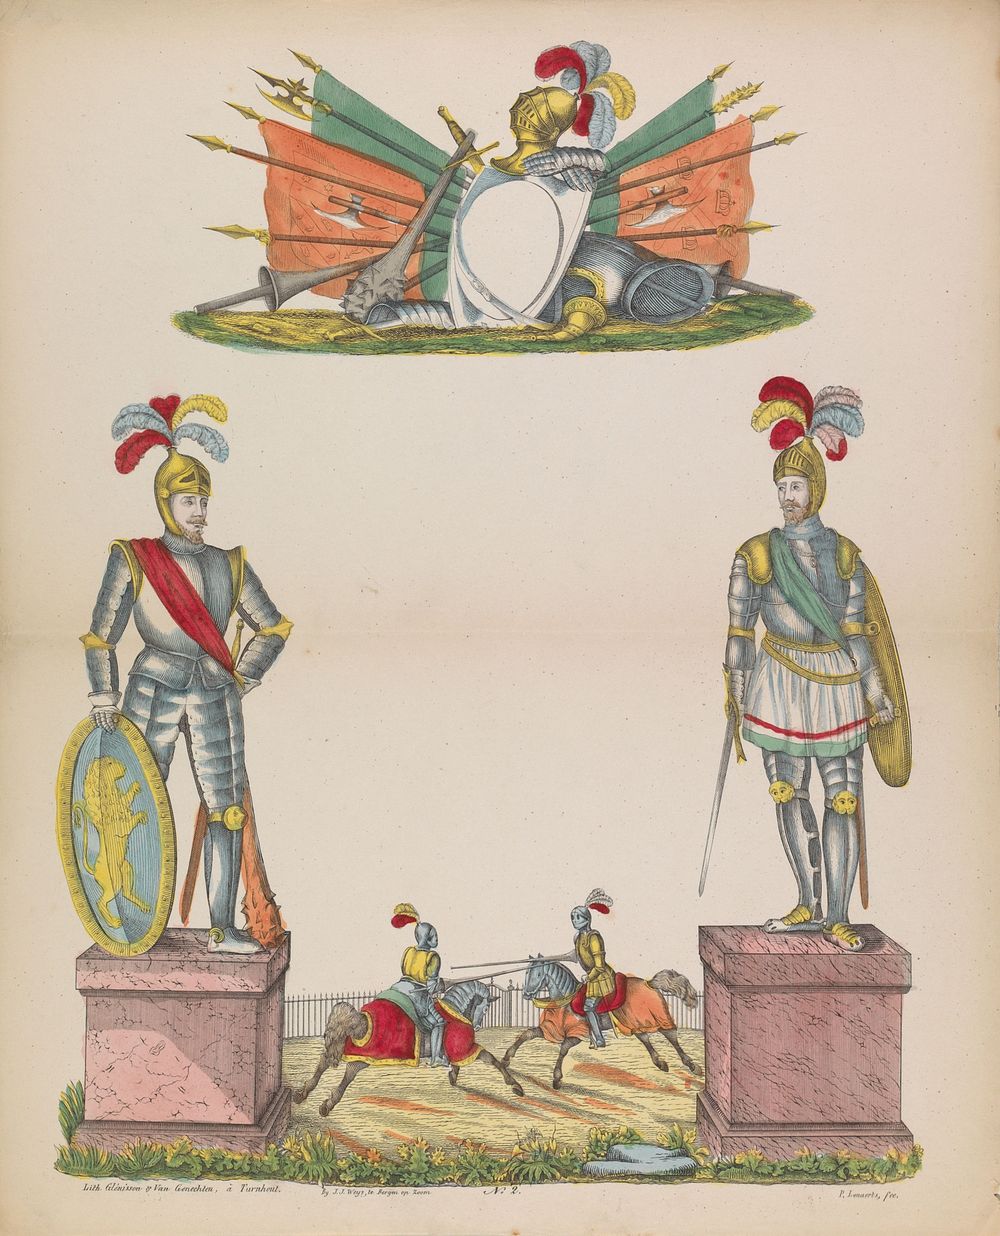 Wensbrief met riddertoernooi (1833 - 1856) by P Lenaerts, Glenisson and Van Genechten and J J Weijs